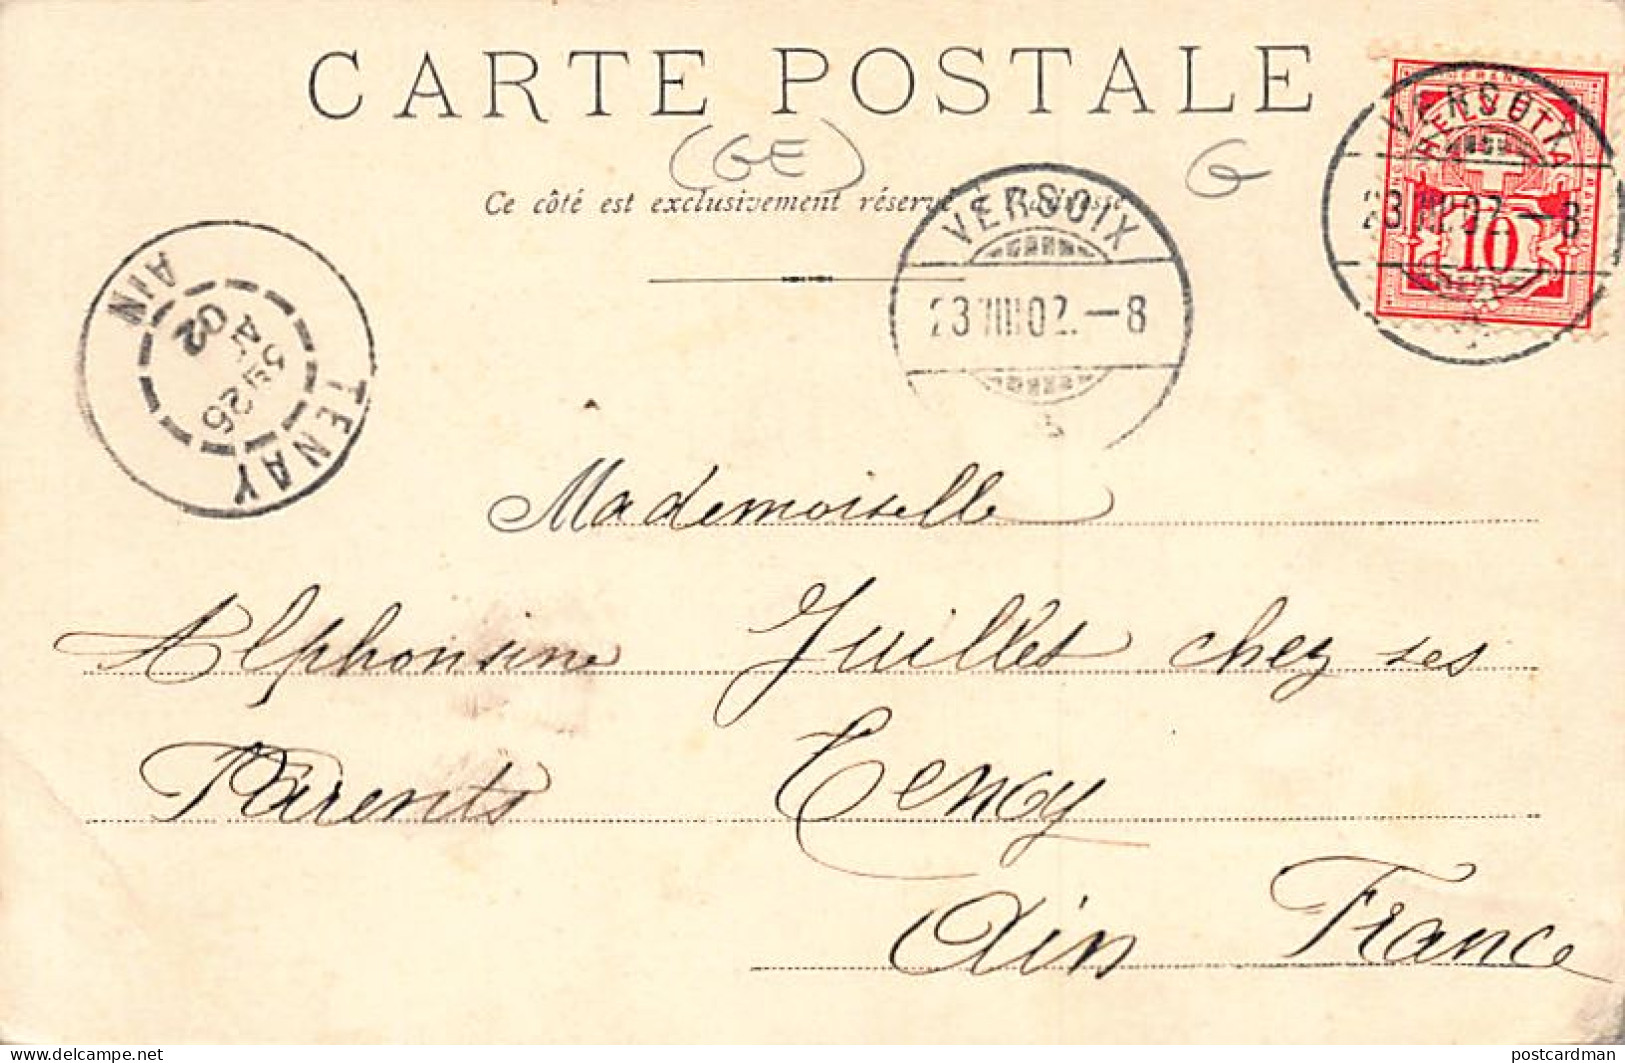 VERSOIX (GE) La Rue - Tramway - Ed. Jullien Frères 1874 - Versoix